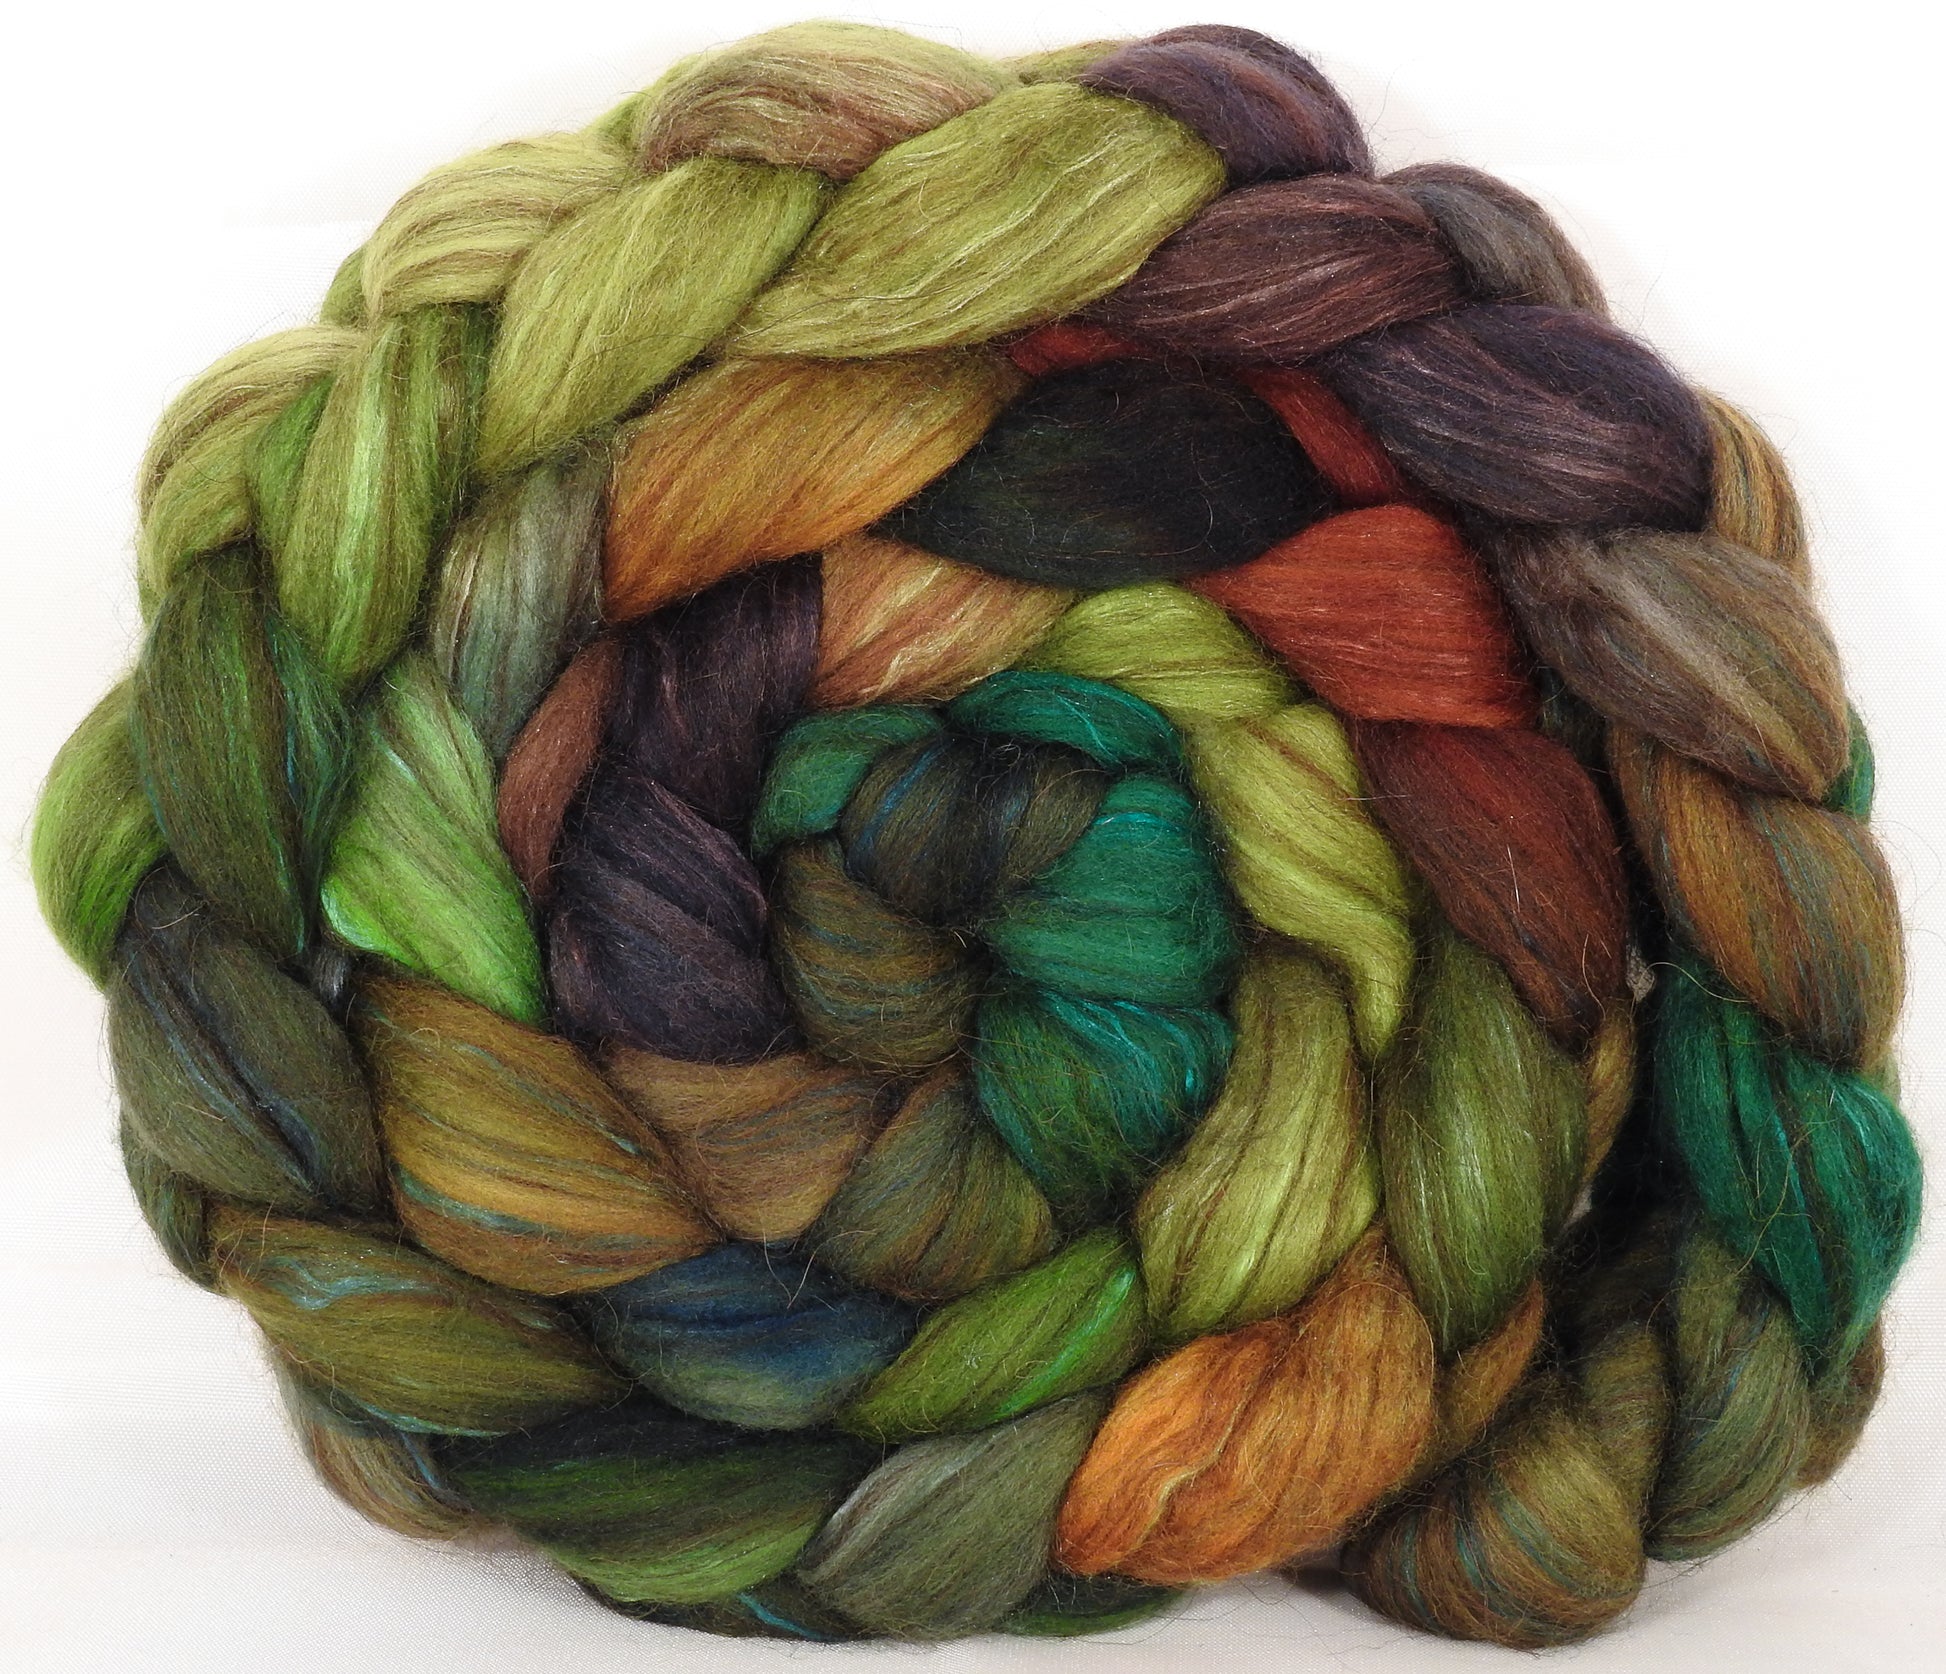 Hand dyed top for spinning -Mossy- 18.5 mic merino/ camel/ brown alpaca/ mulberry silk/ (40/20/20/20) - Inglenook Fibers